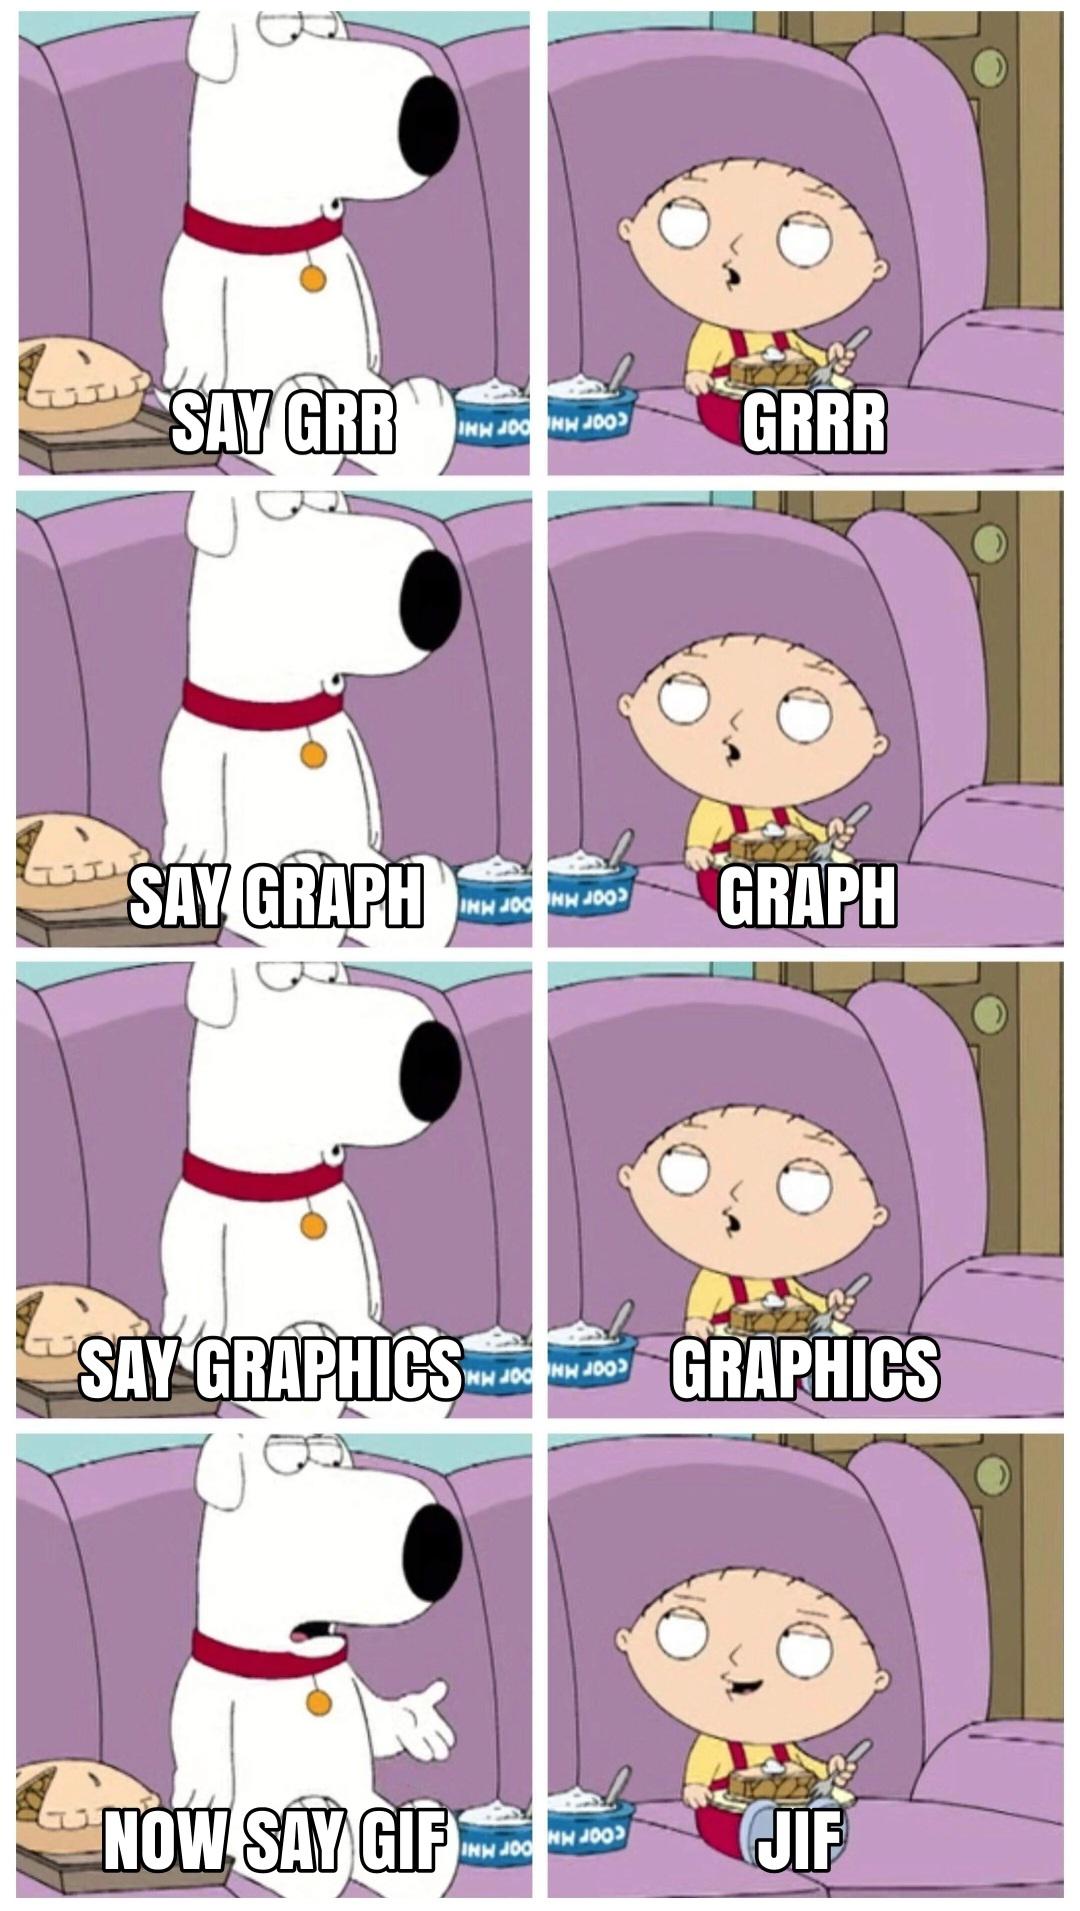 dank memes and funny pics - comics - Jif Graphics Graph Grrr coor Mh Oor Mhi coor Mh por Mm Say Graphics coor Mh Oor Mhi Now Say Gif coor Mh Oor Mhi Say Graph Say Grr